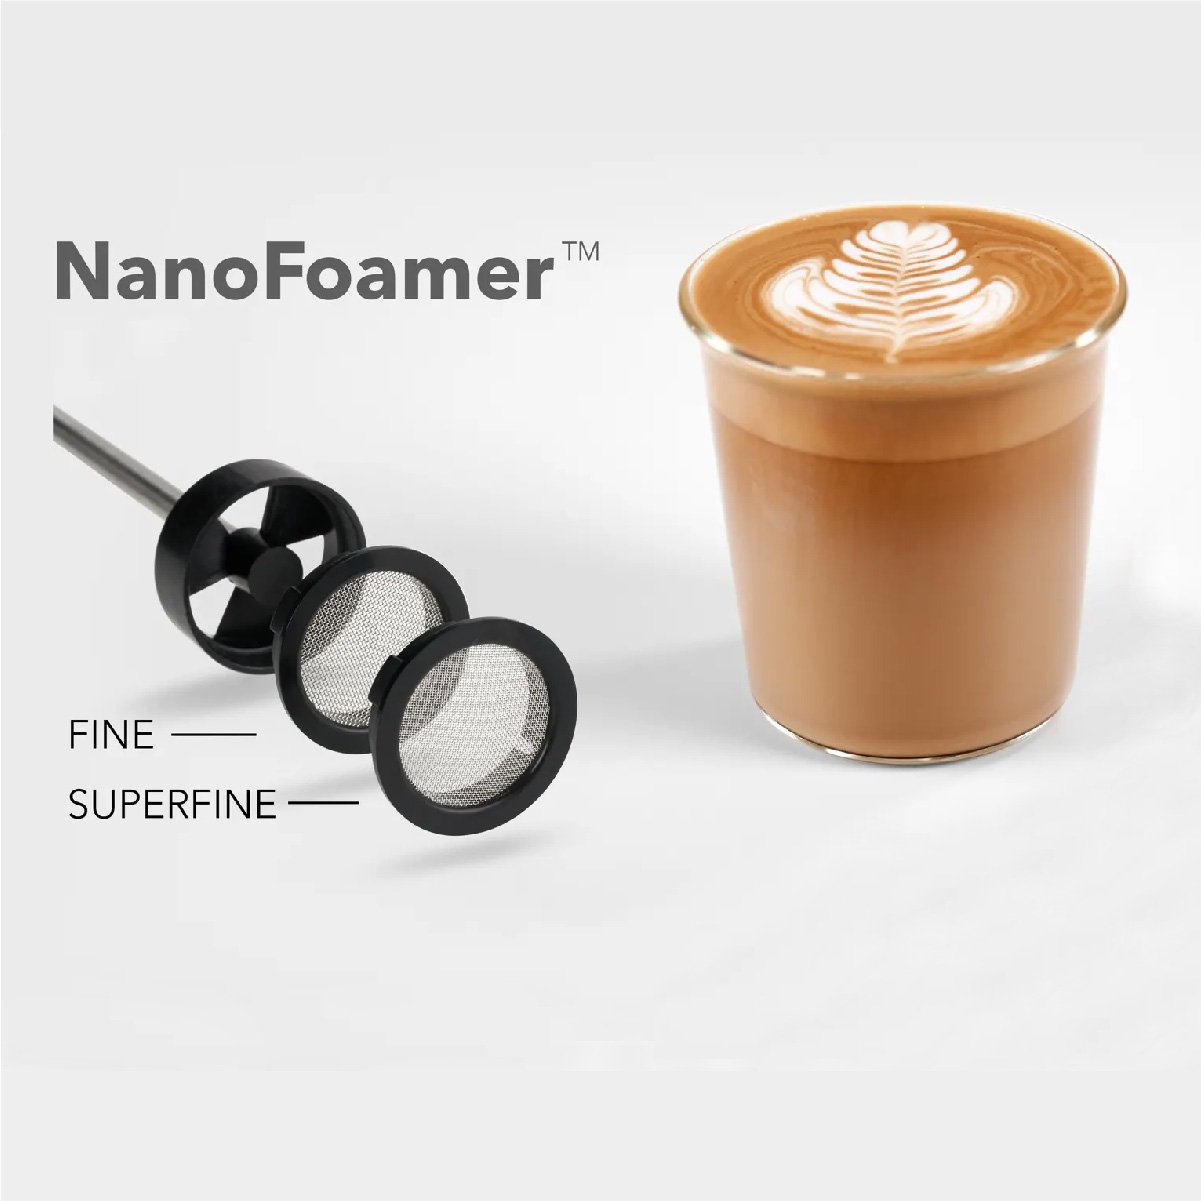 Subminimal NanoFoamer Milk Frother